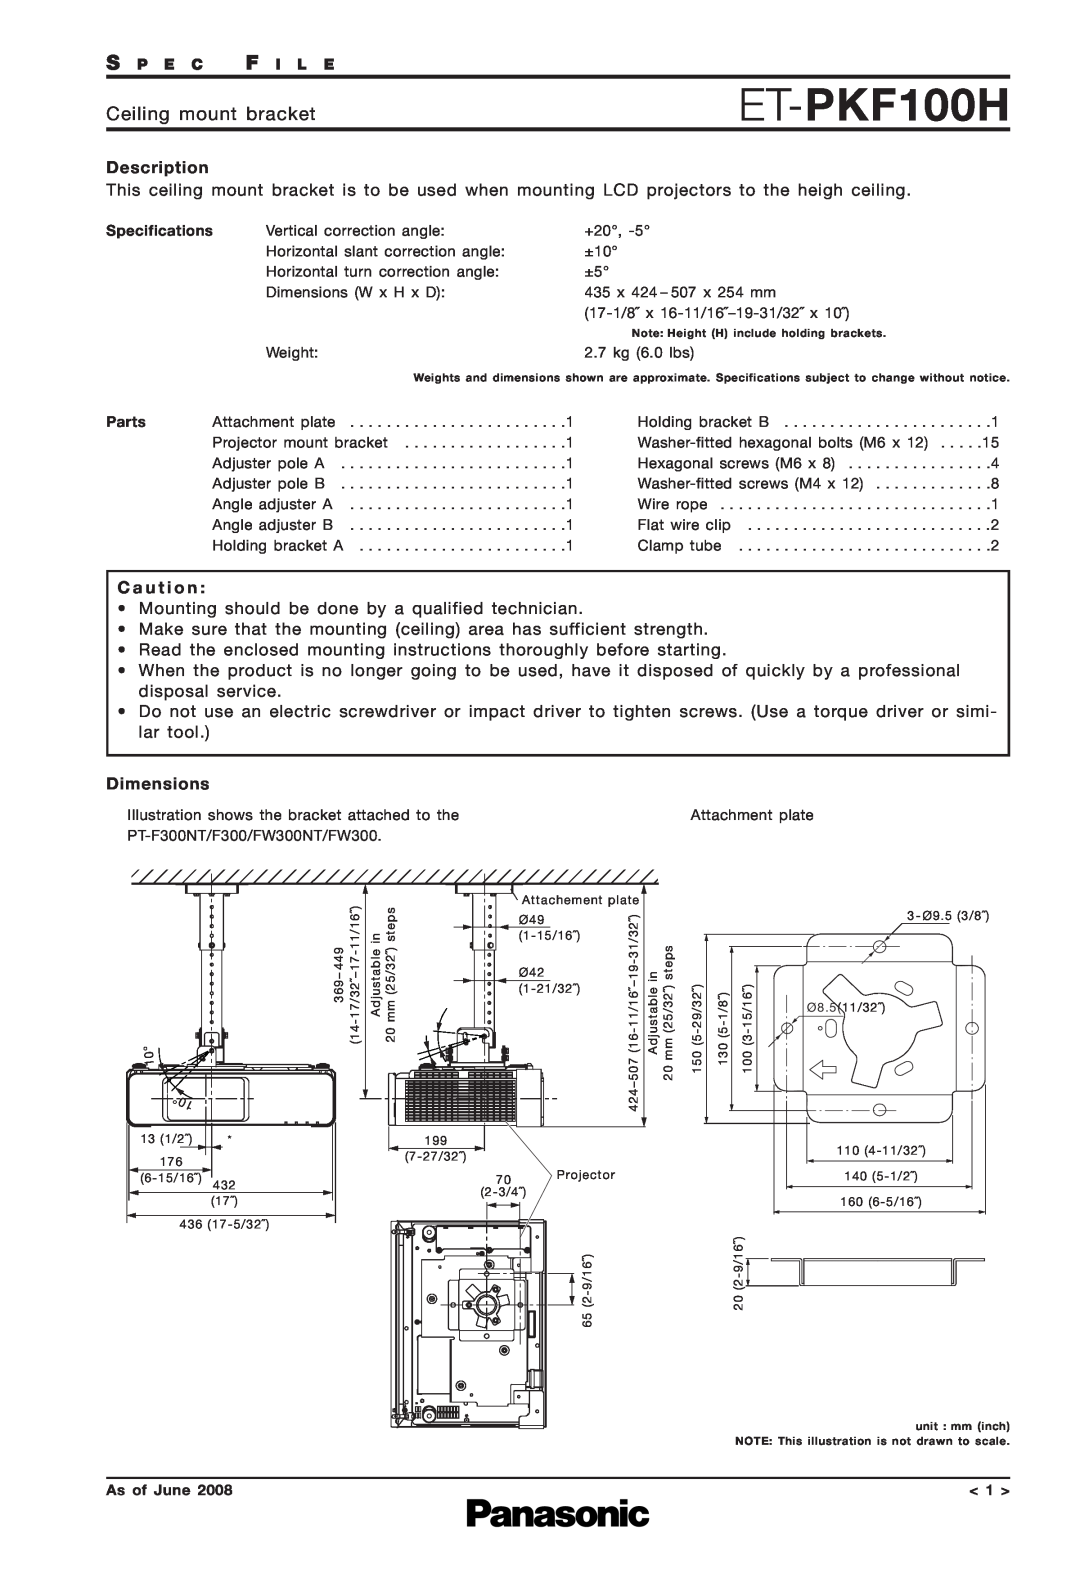 Panasonic ET-PKF100H dimensions Ceiling mount bracket, Description, C a u t i o n, Dimensions 